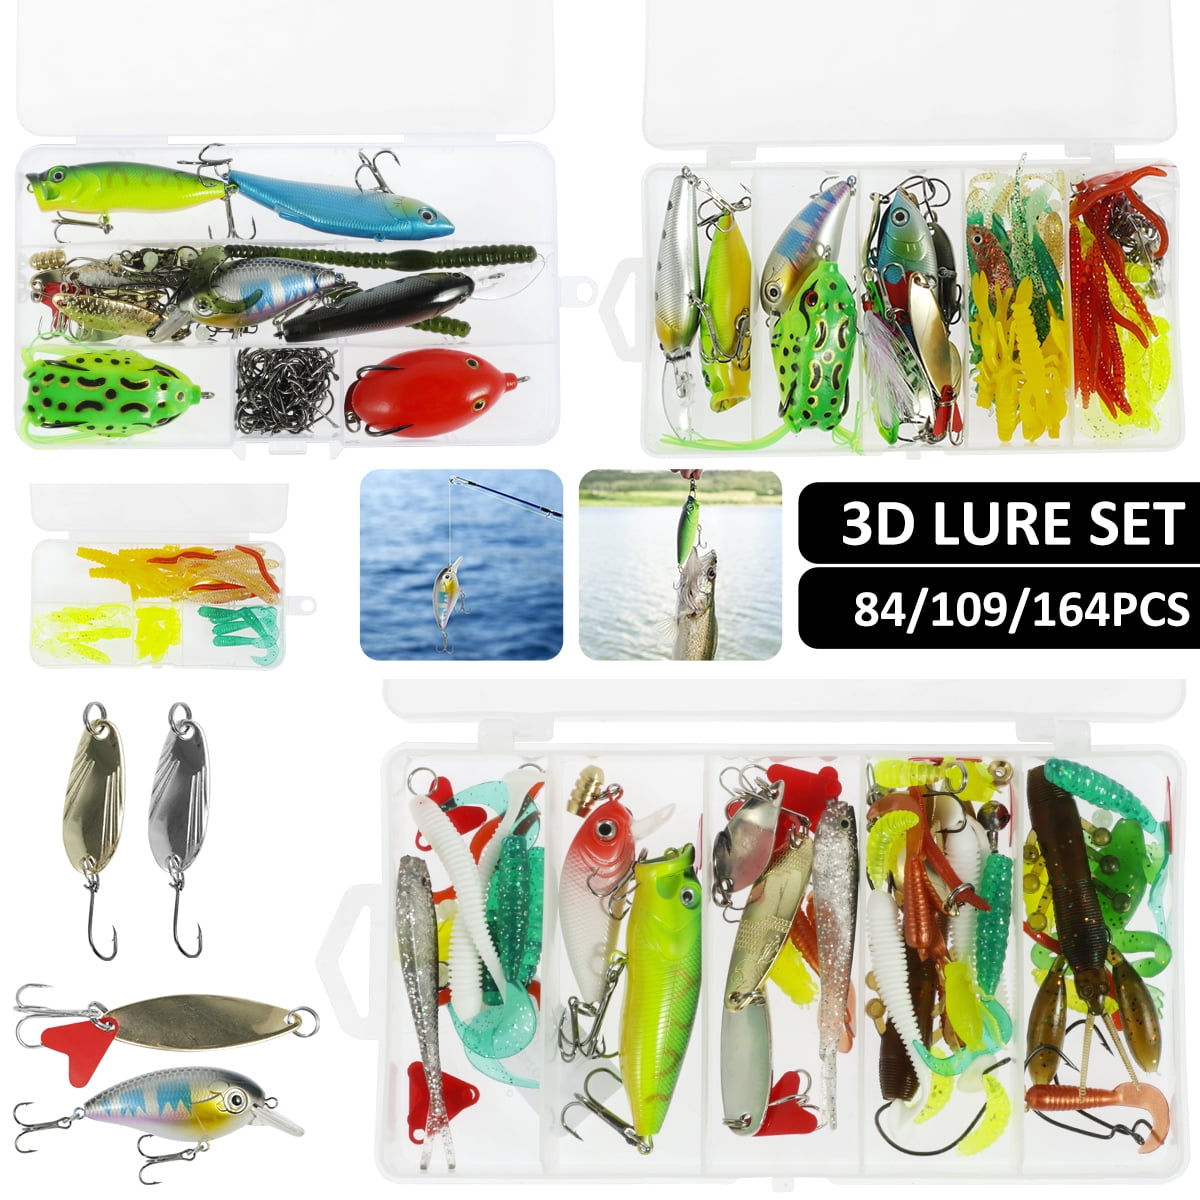 OROOTL Fishing Spoons Metal Lures, 30pcs Colorful Hard Fishing